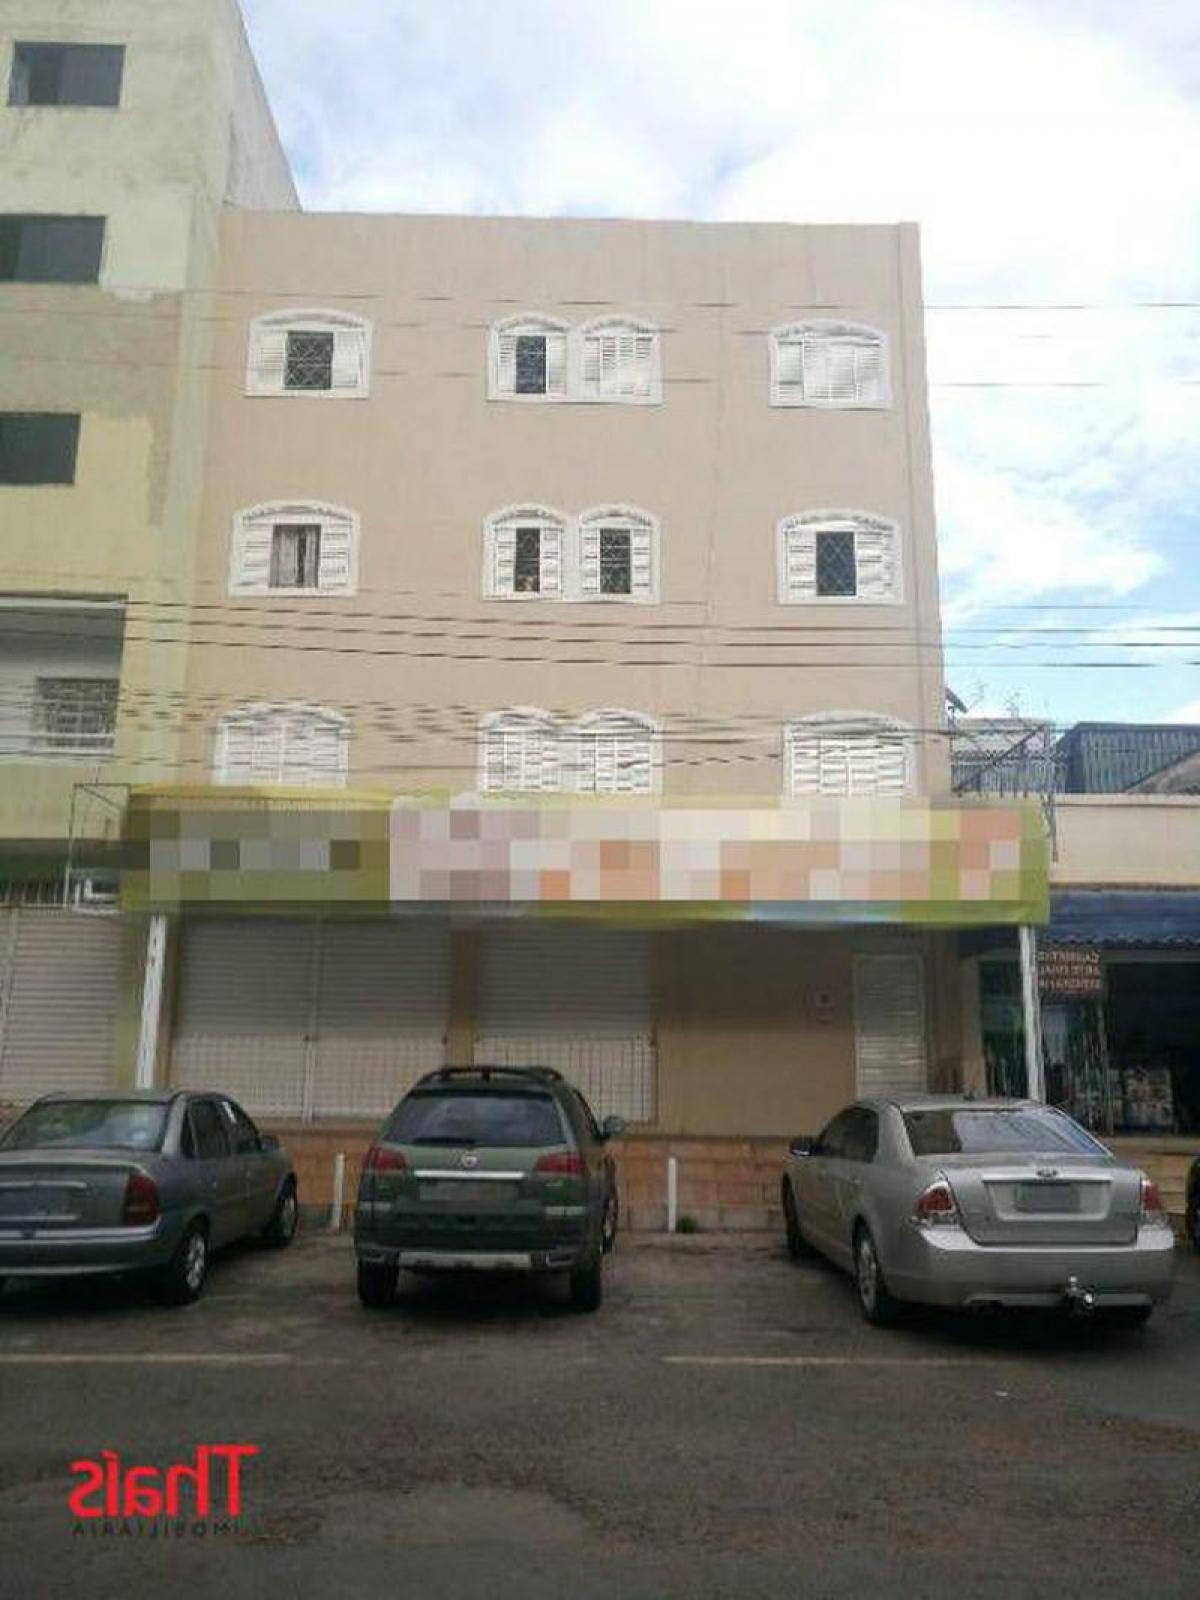 Picture of Commercial Building For Sale in Brasilia, Distrito Federal, Brazil